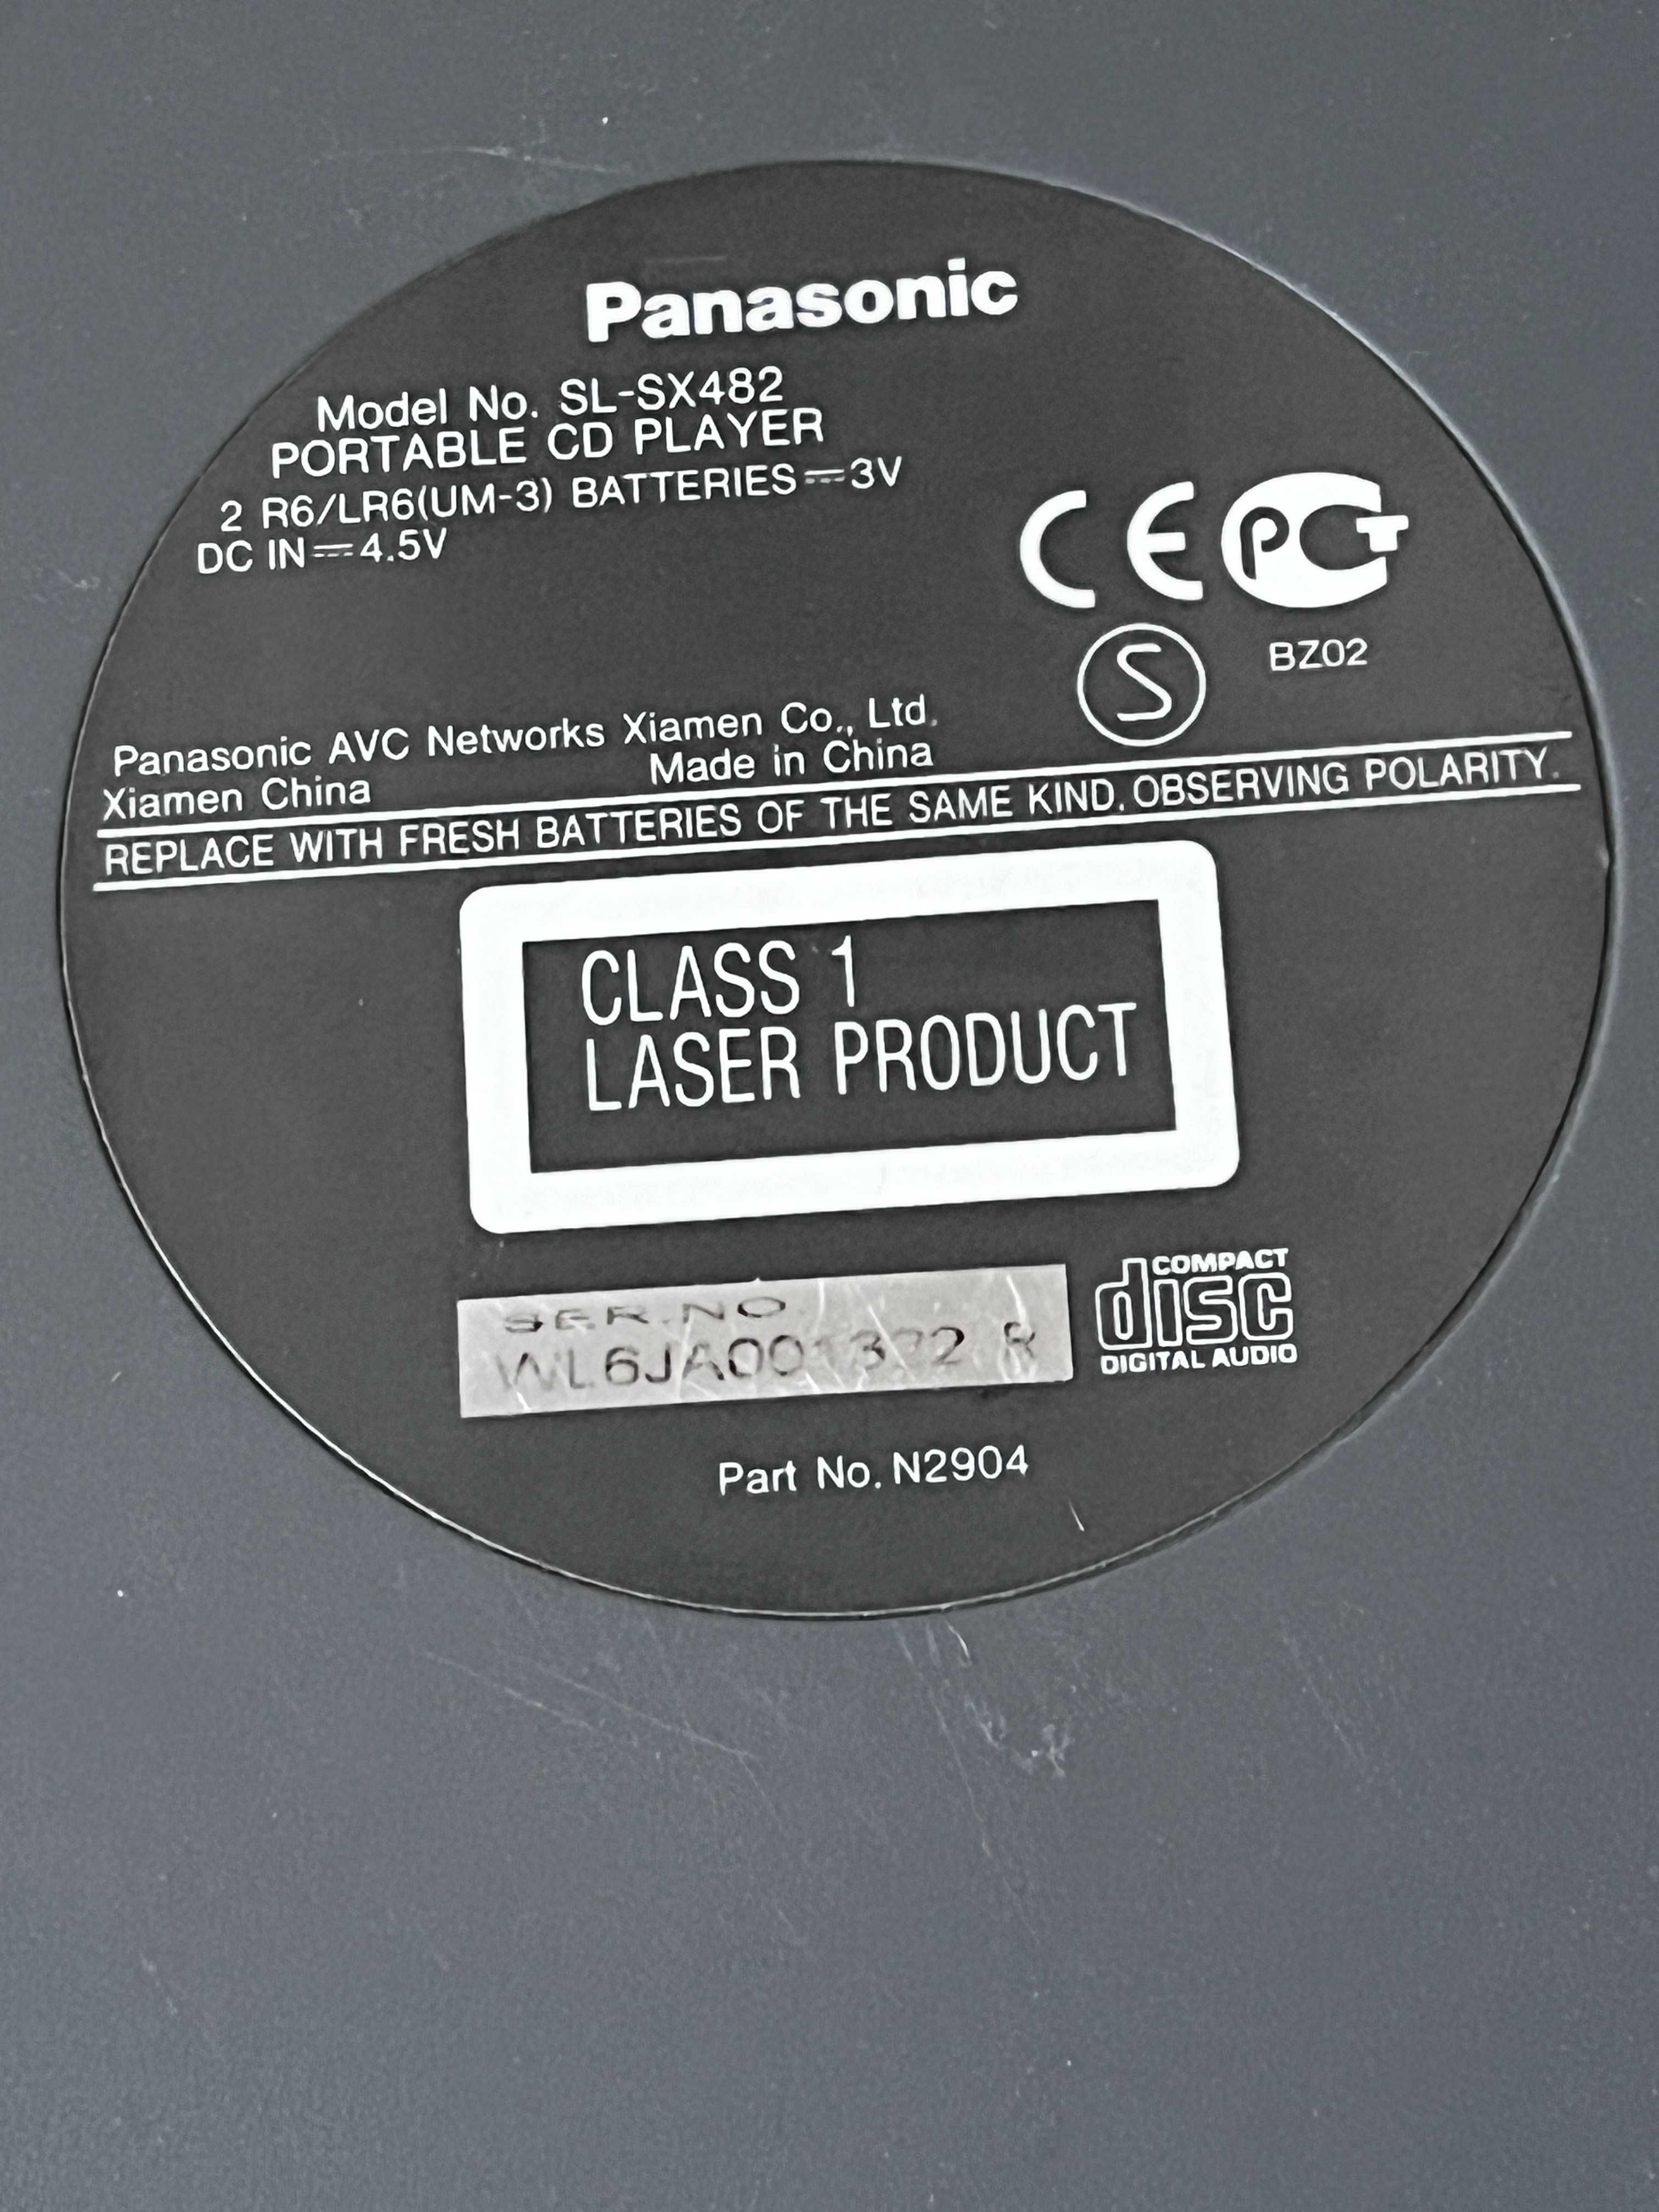 CD - MP3 плеер Panasonic SL-SX482